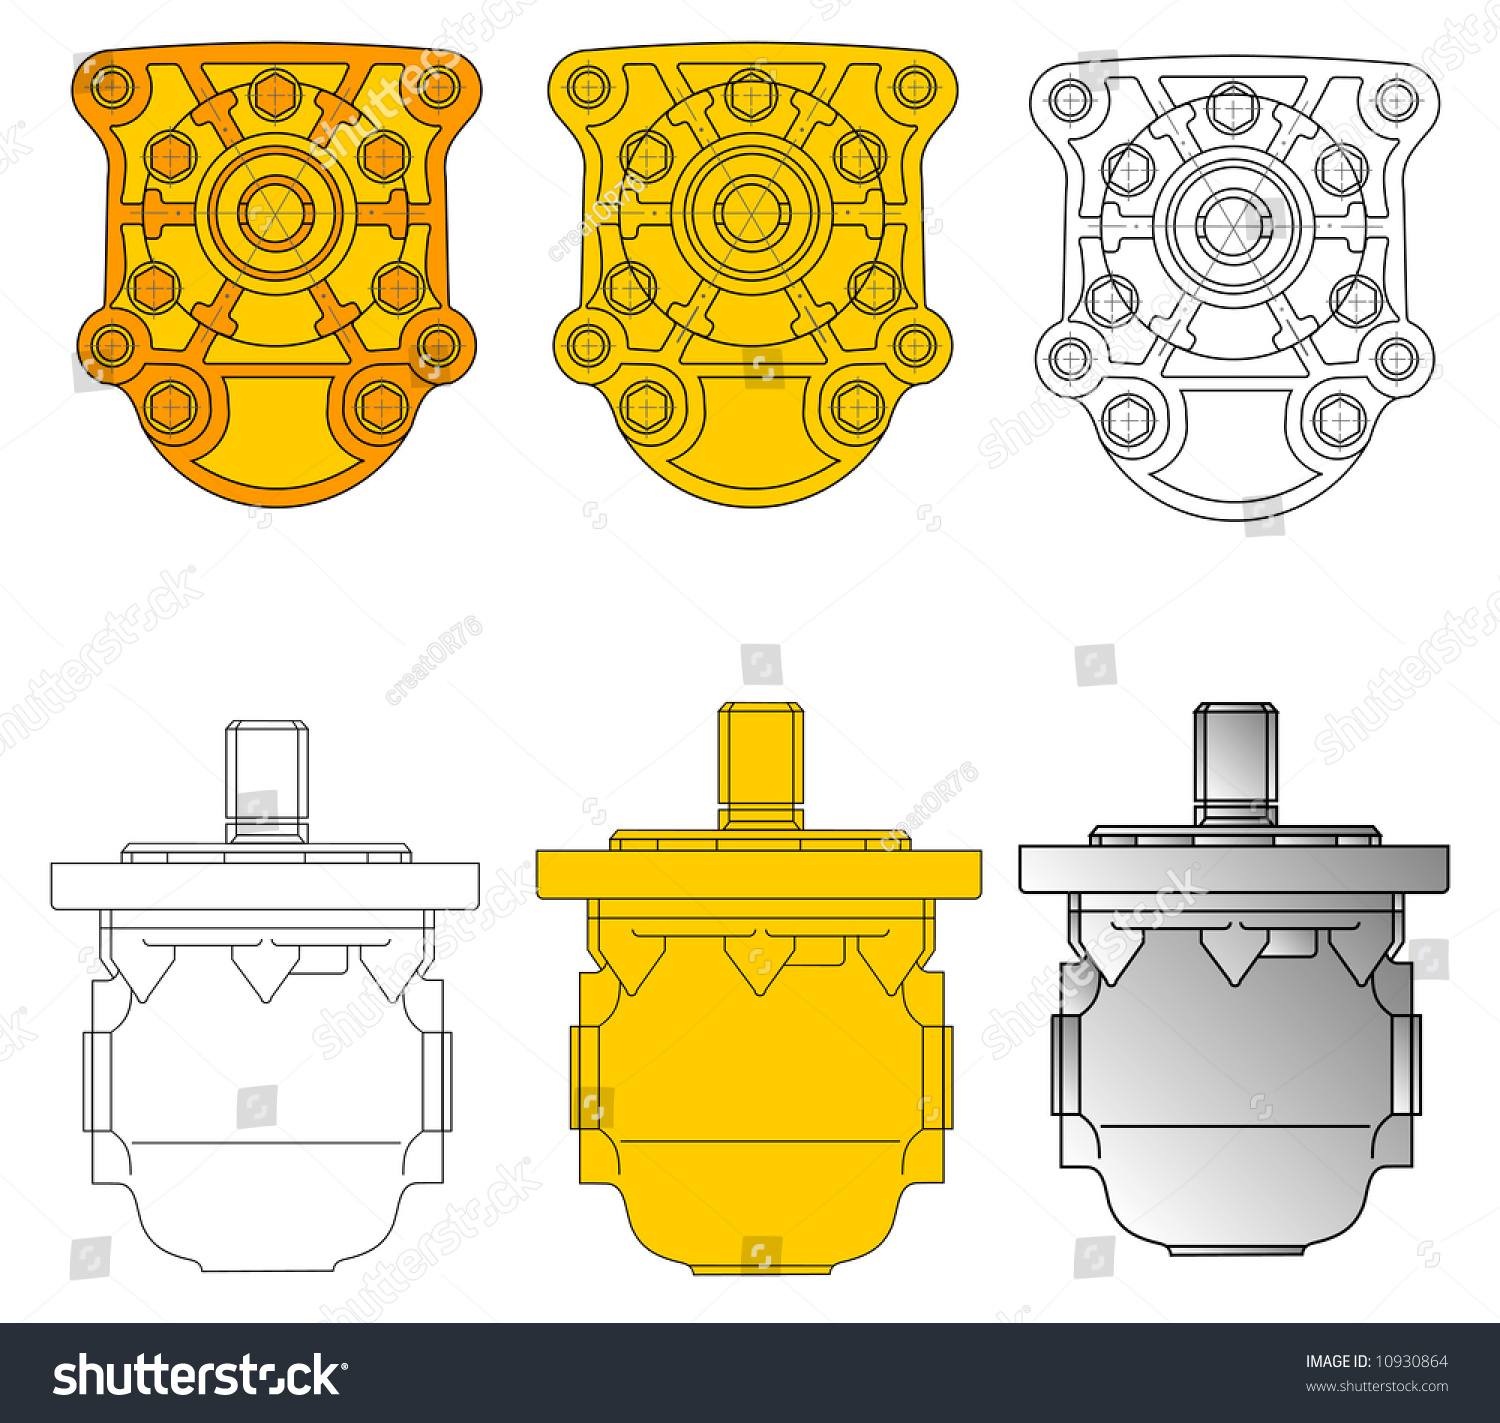 Motor Engine Mechanism Cut Technical Drawing Stock Vector 10930864